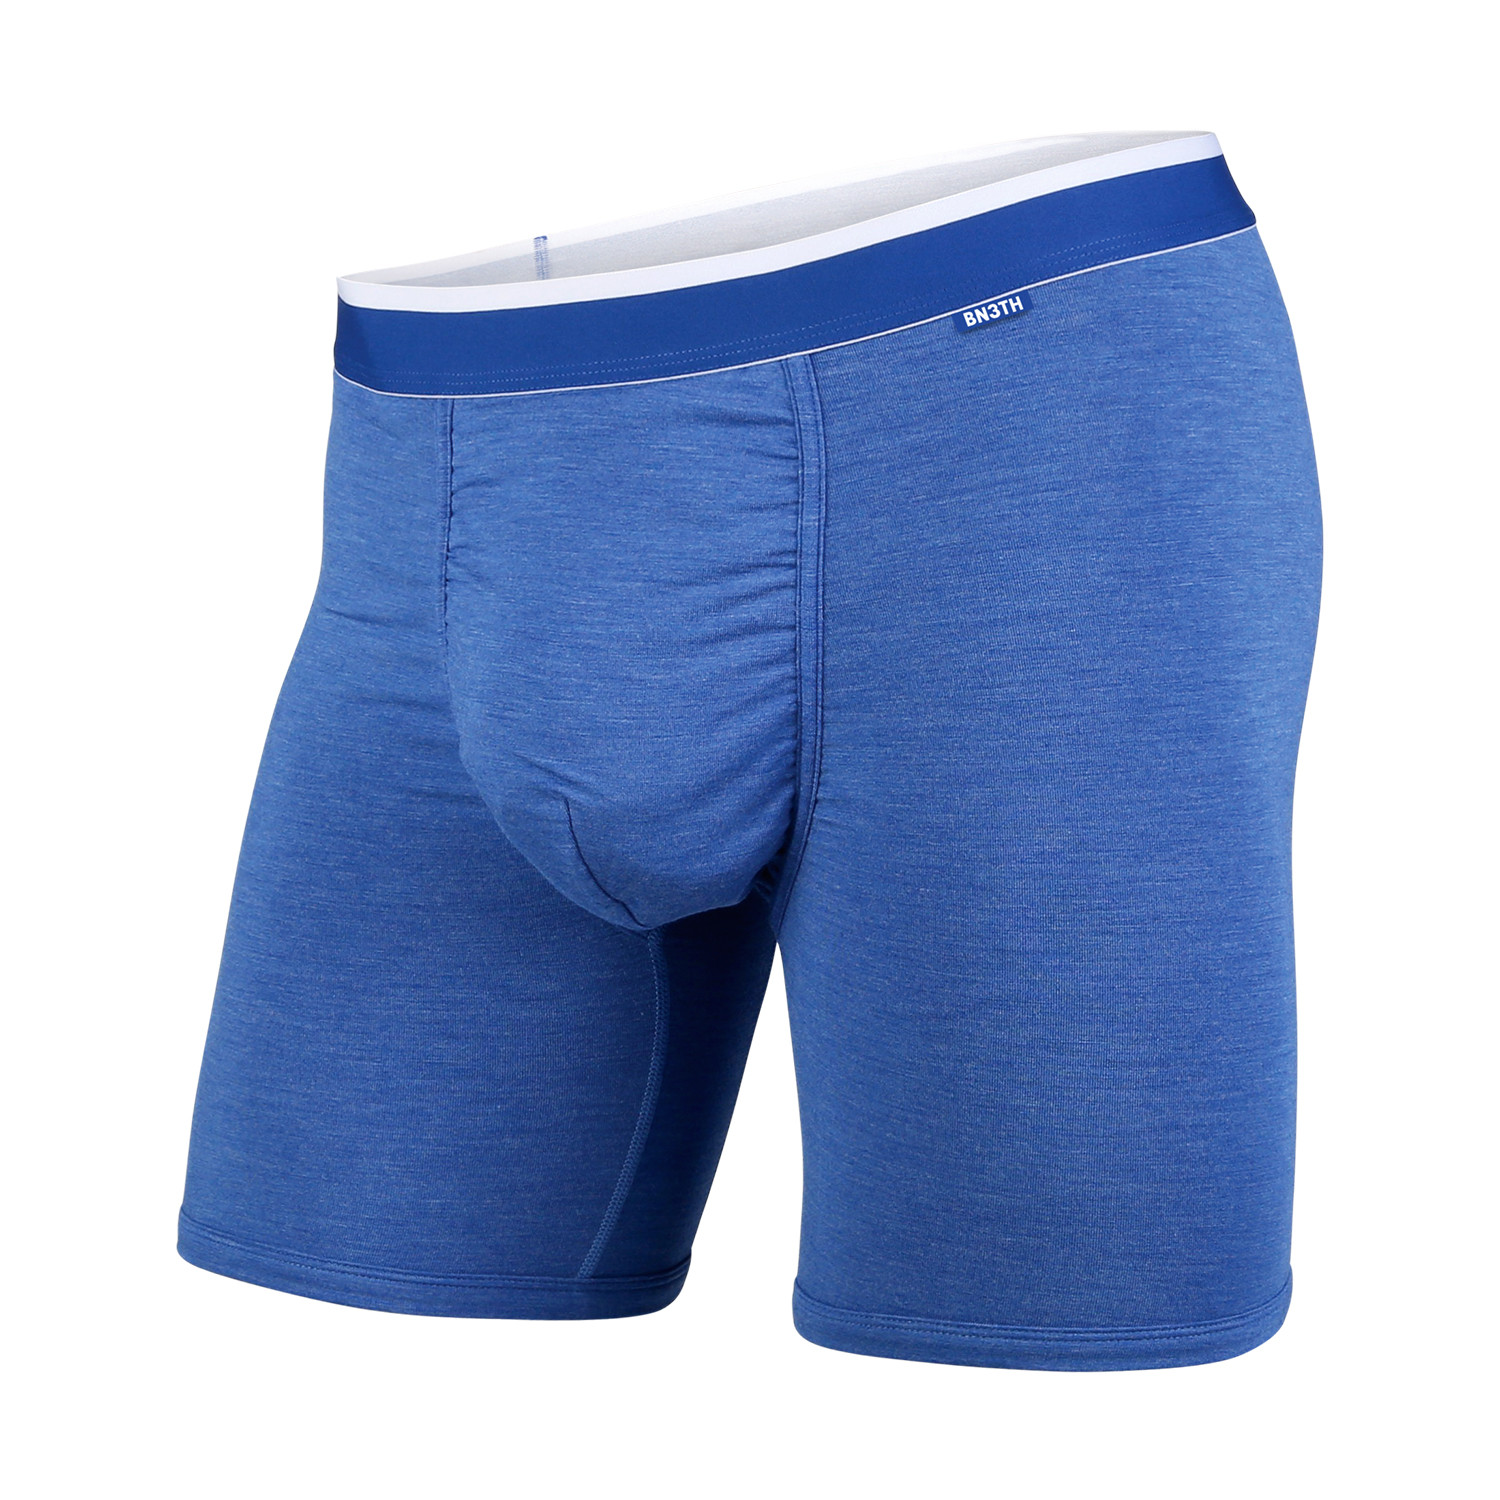 Classic Boxer Brief // Blue Heather + White (S) - BN3TH Underwear ...